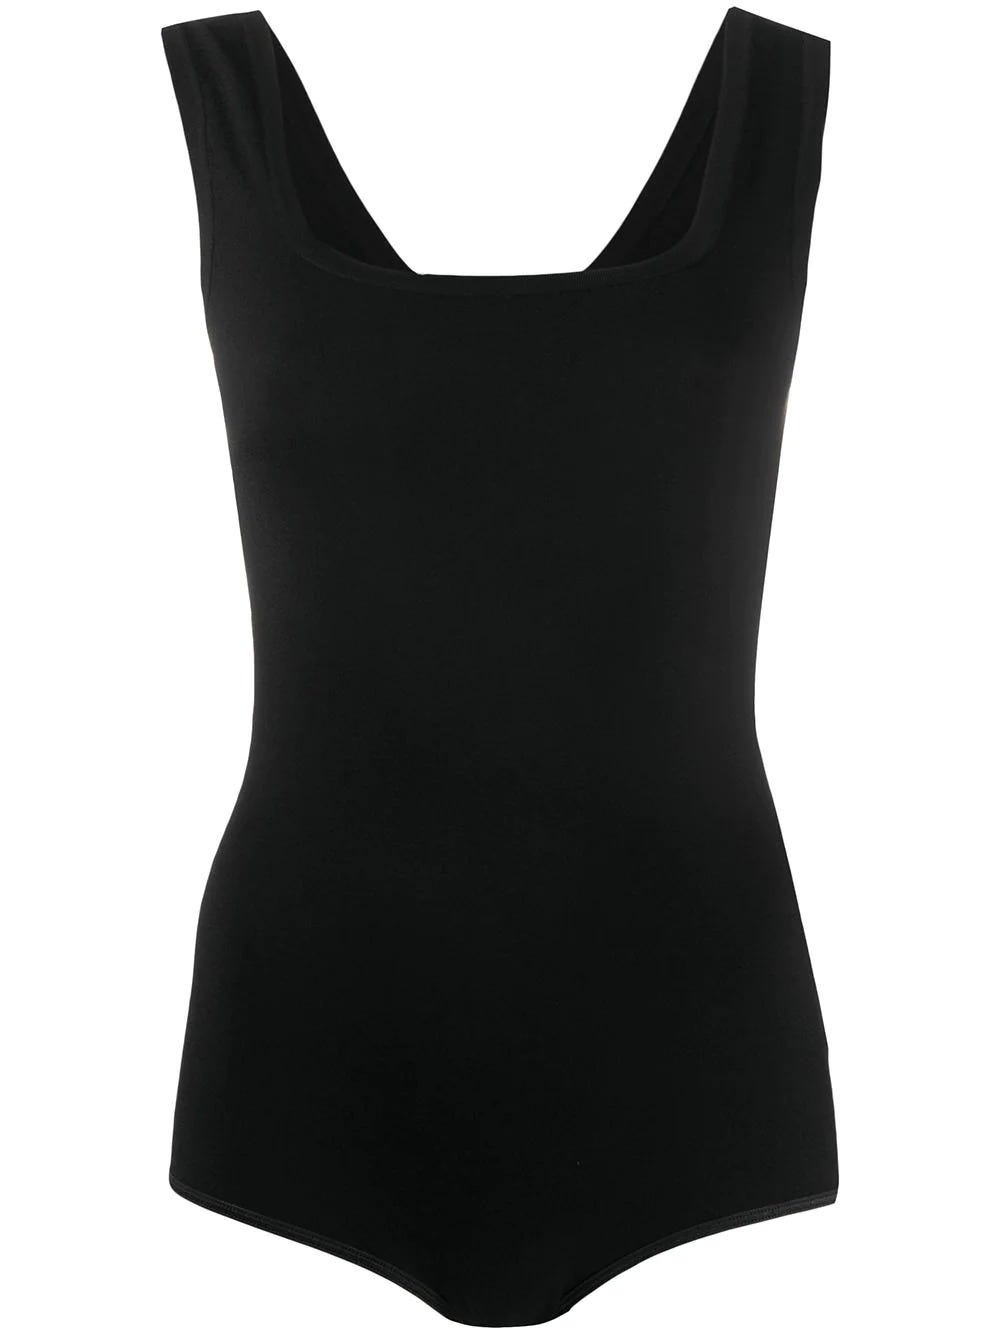 Black sleeveless Bodysuit with square neckline